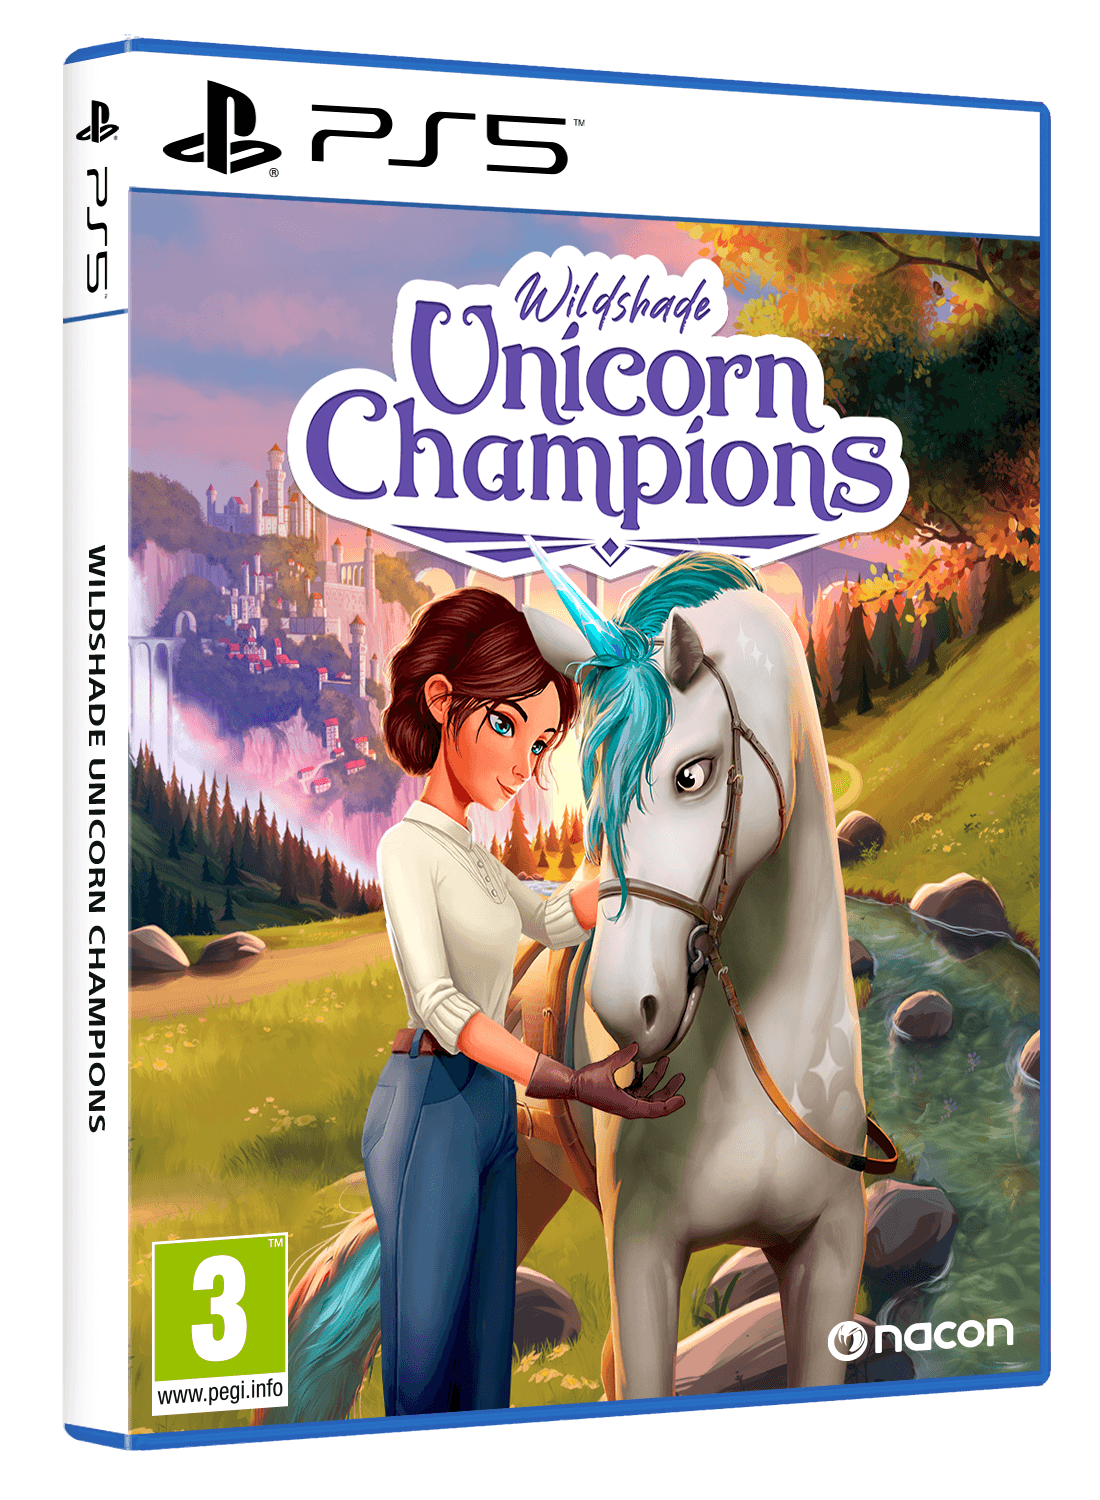 PlayStation 5 - Wildshade: Unicorn Champions - Want a New Gadget